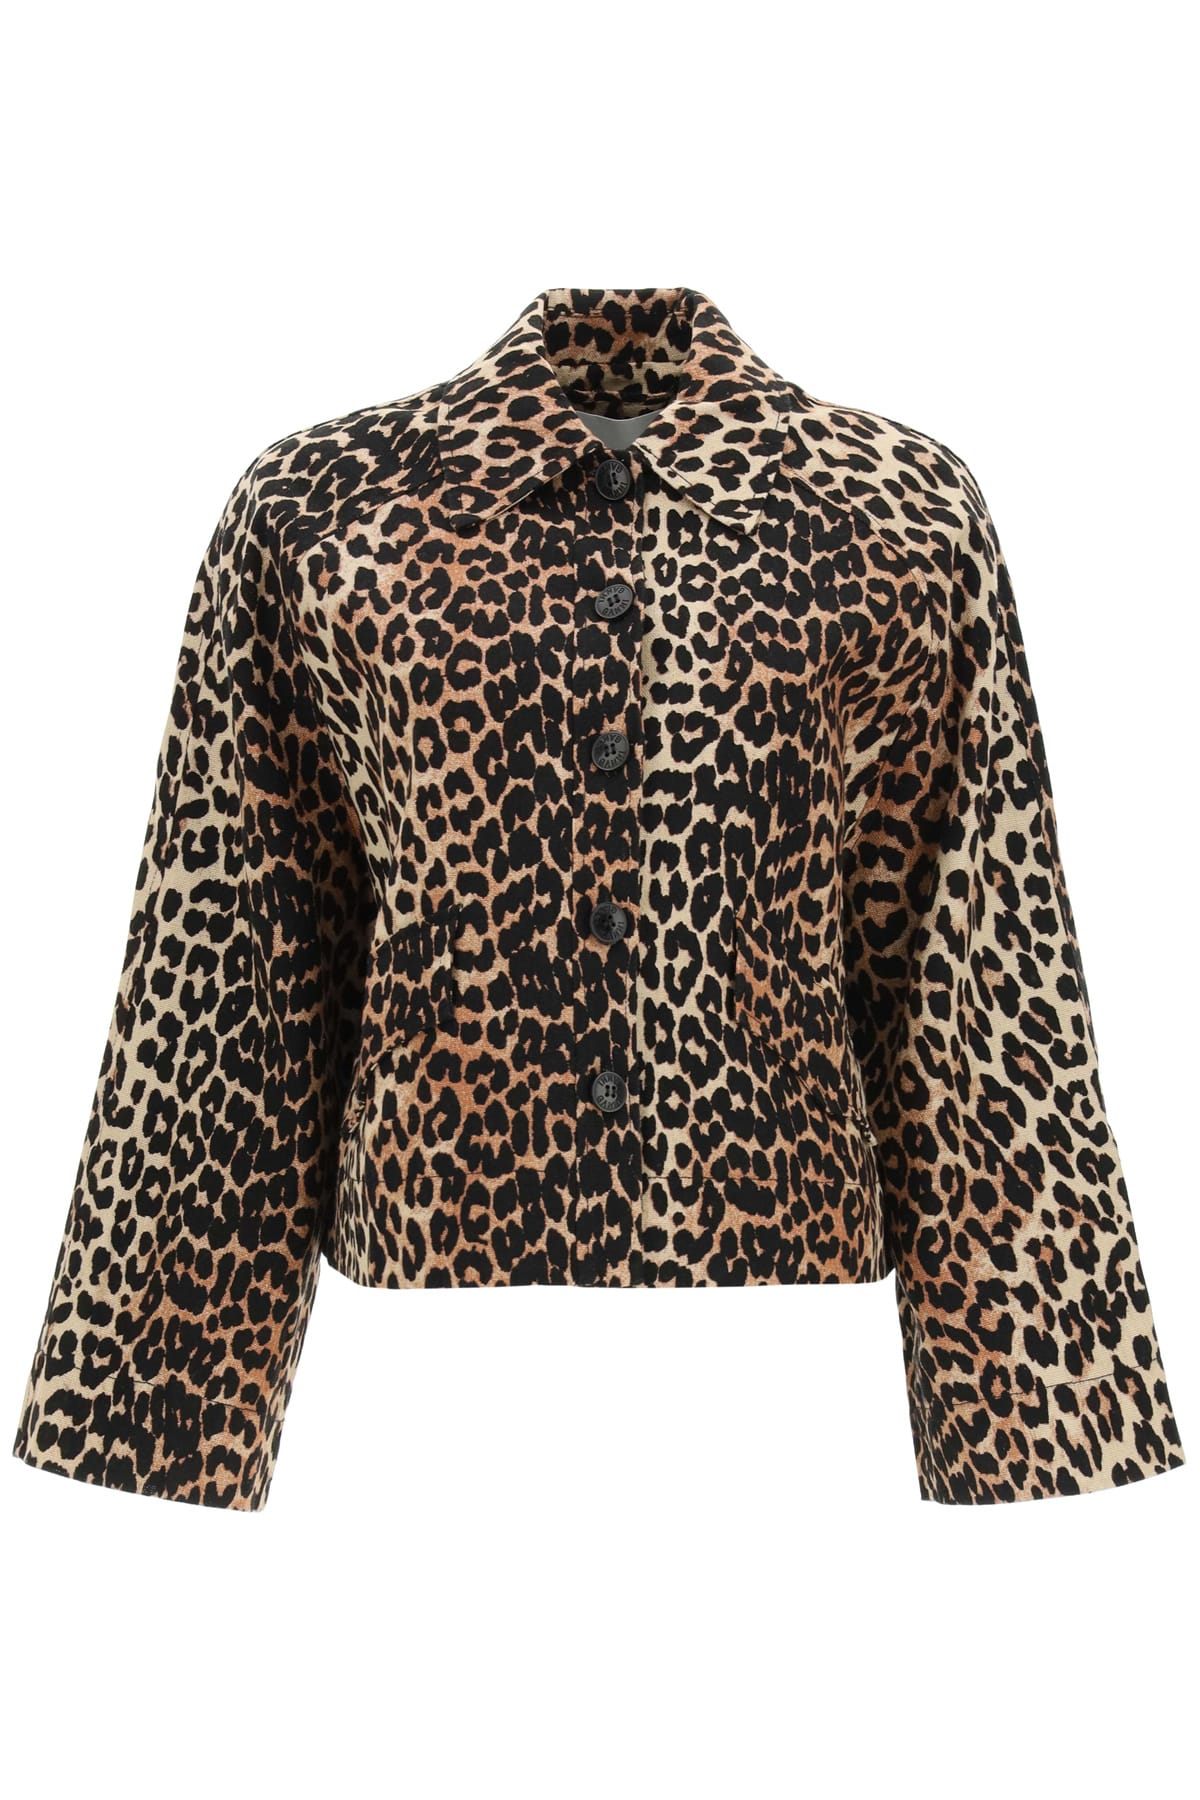 Ganni Leopard Linen Blend Jacket